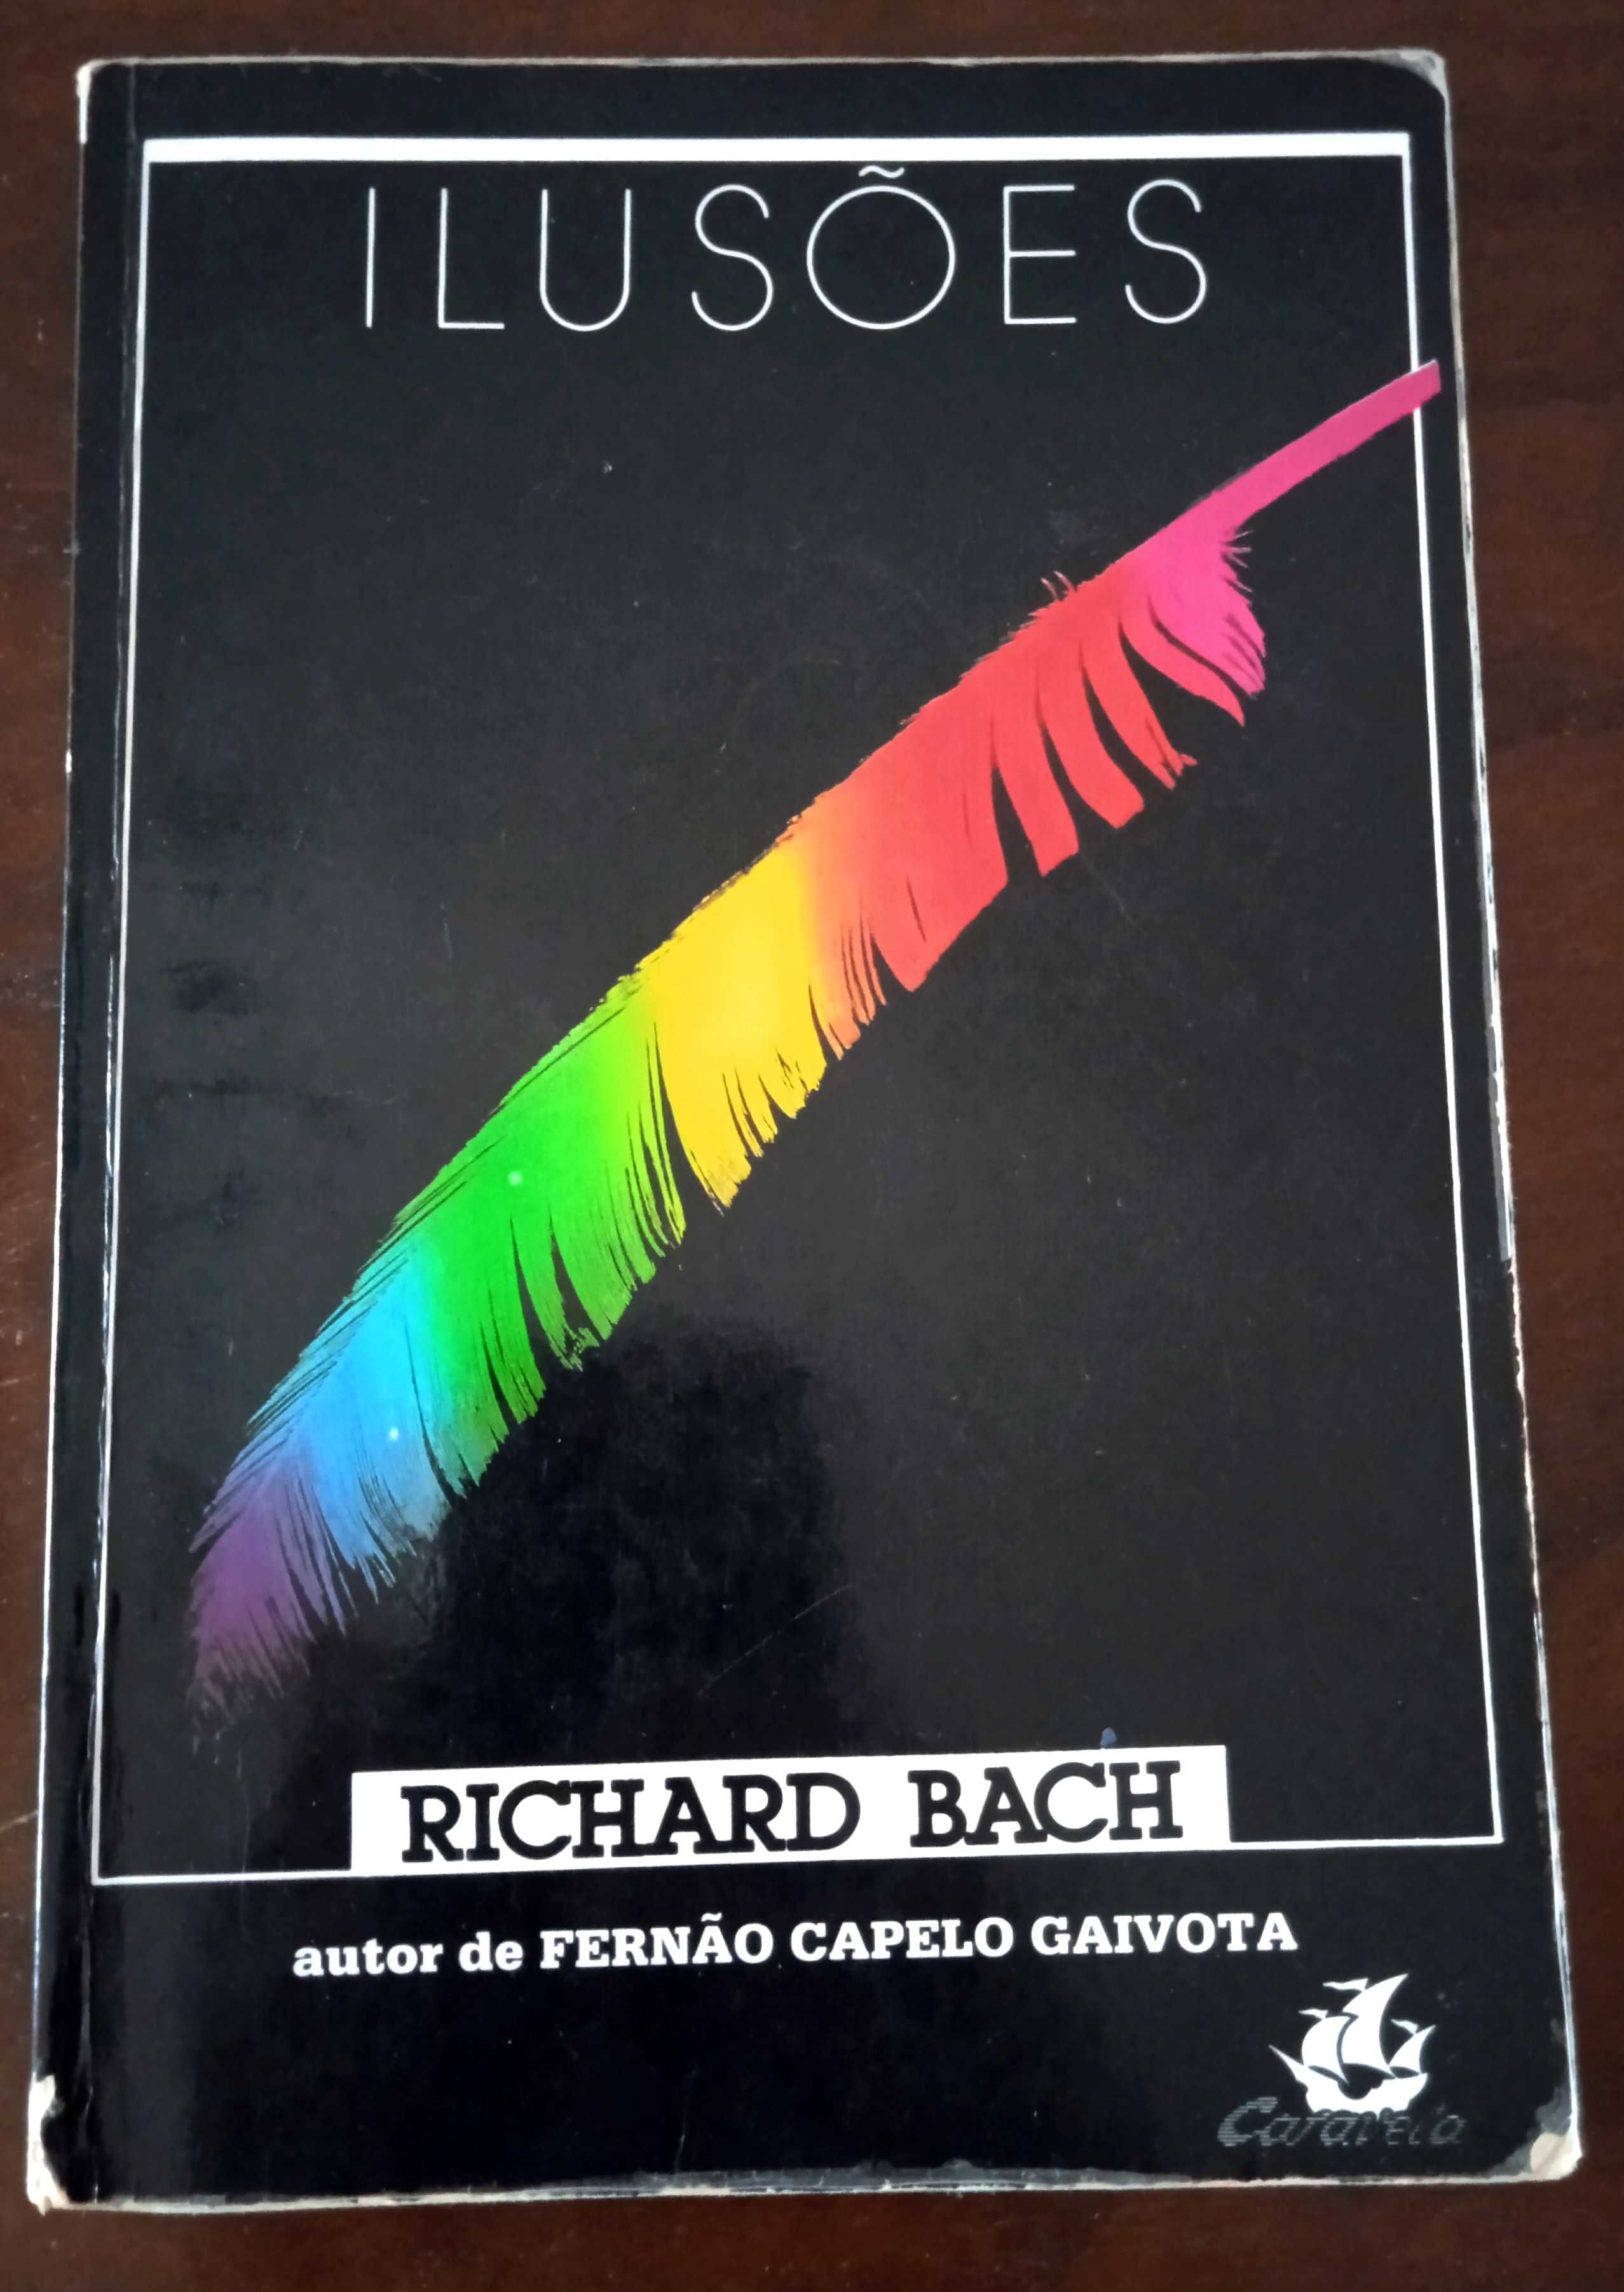 Livro "Ilusões", de Richard Bach